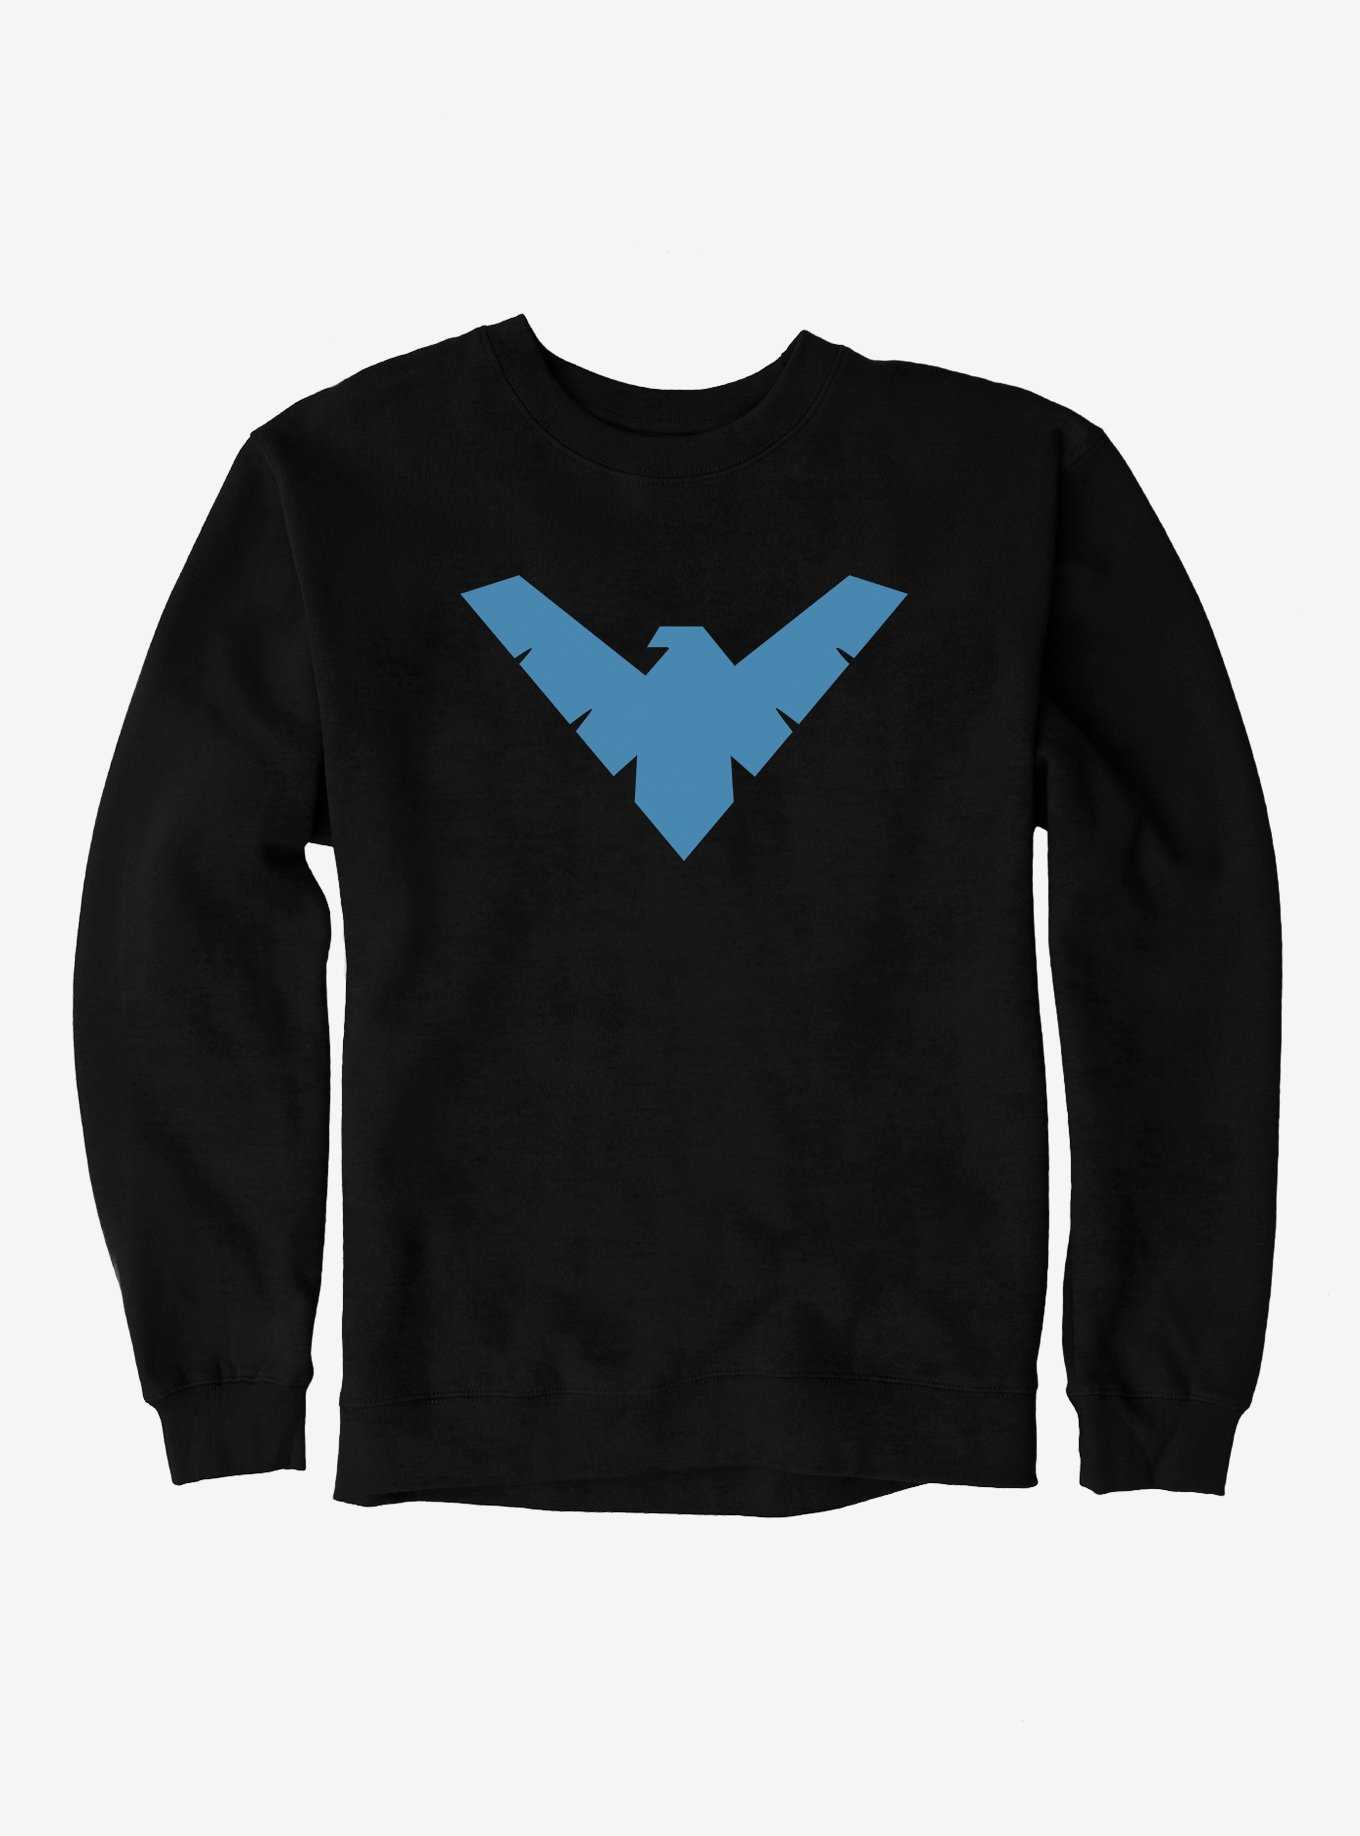 DC Batman Nightwing Logo Sweatshirt, , hi-res